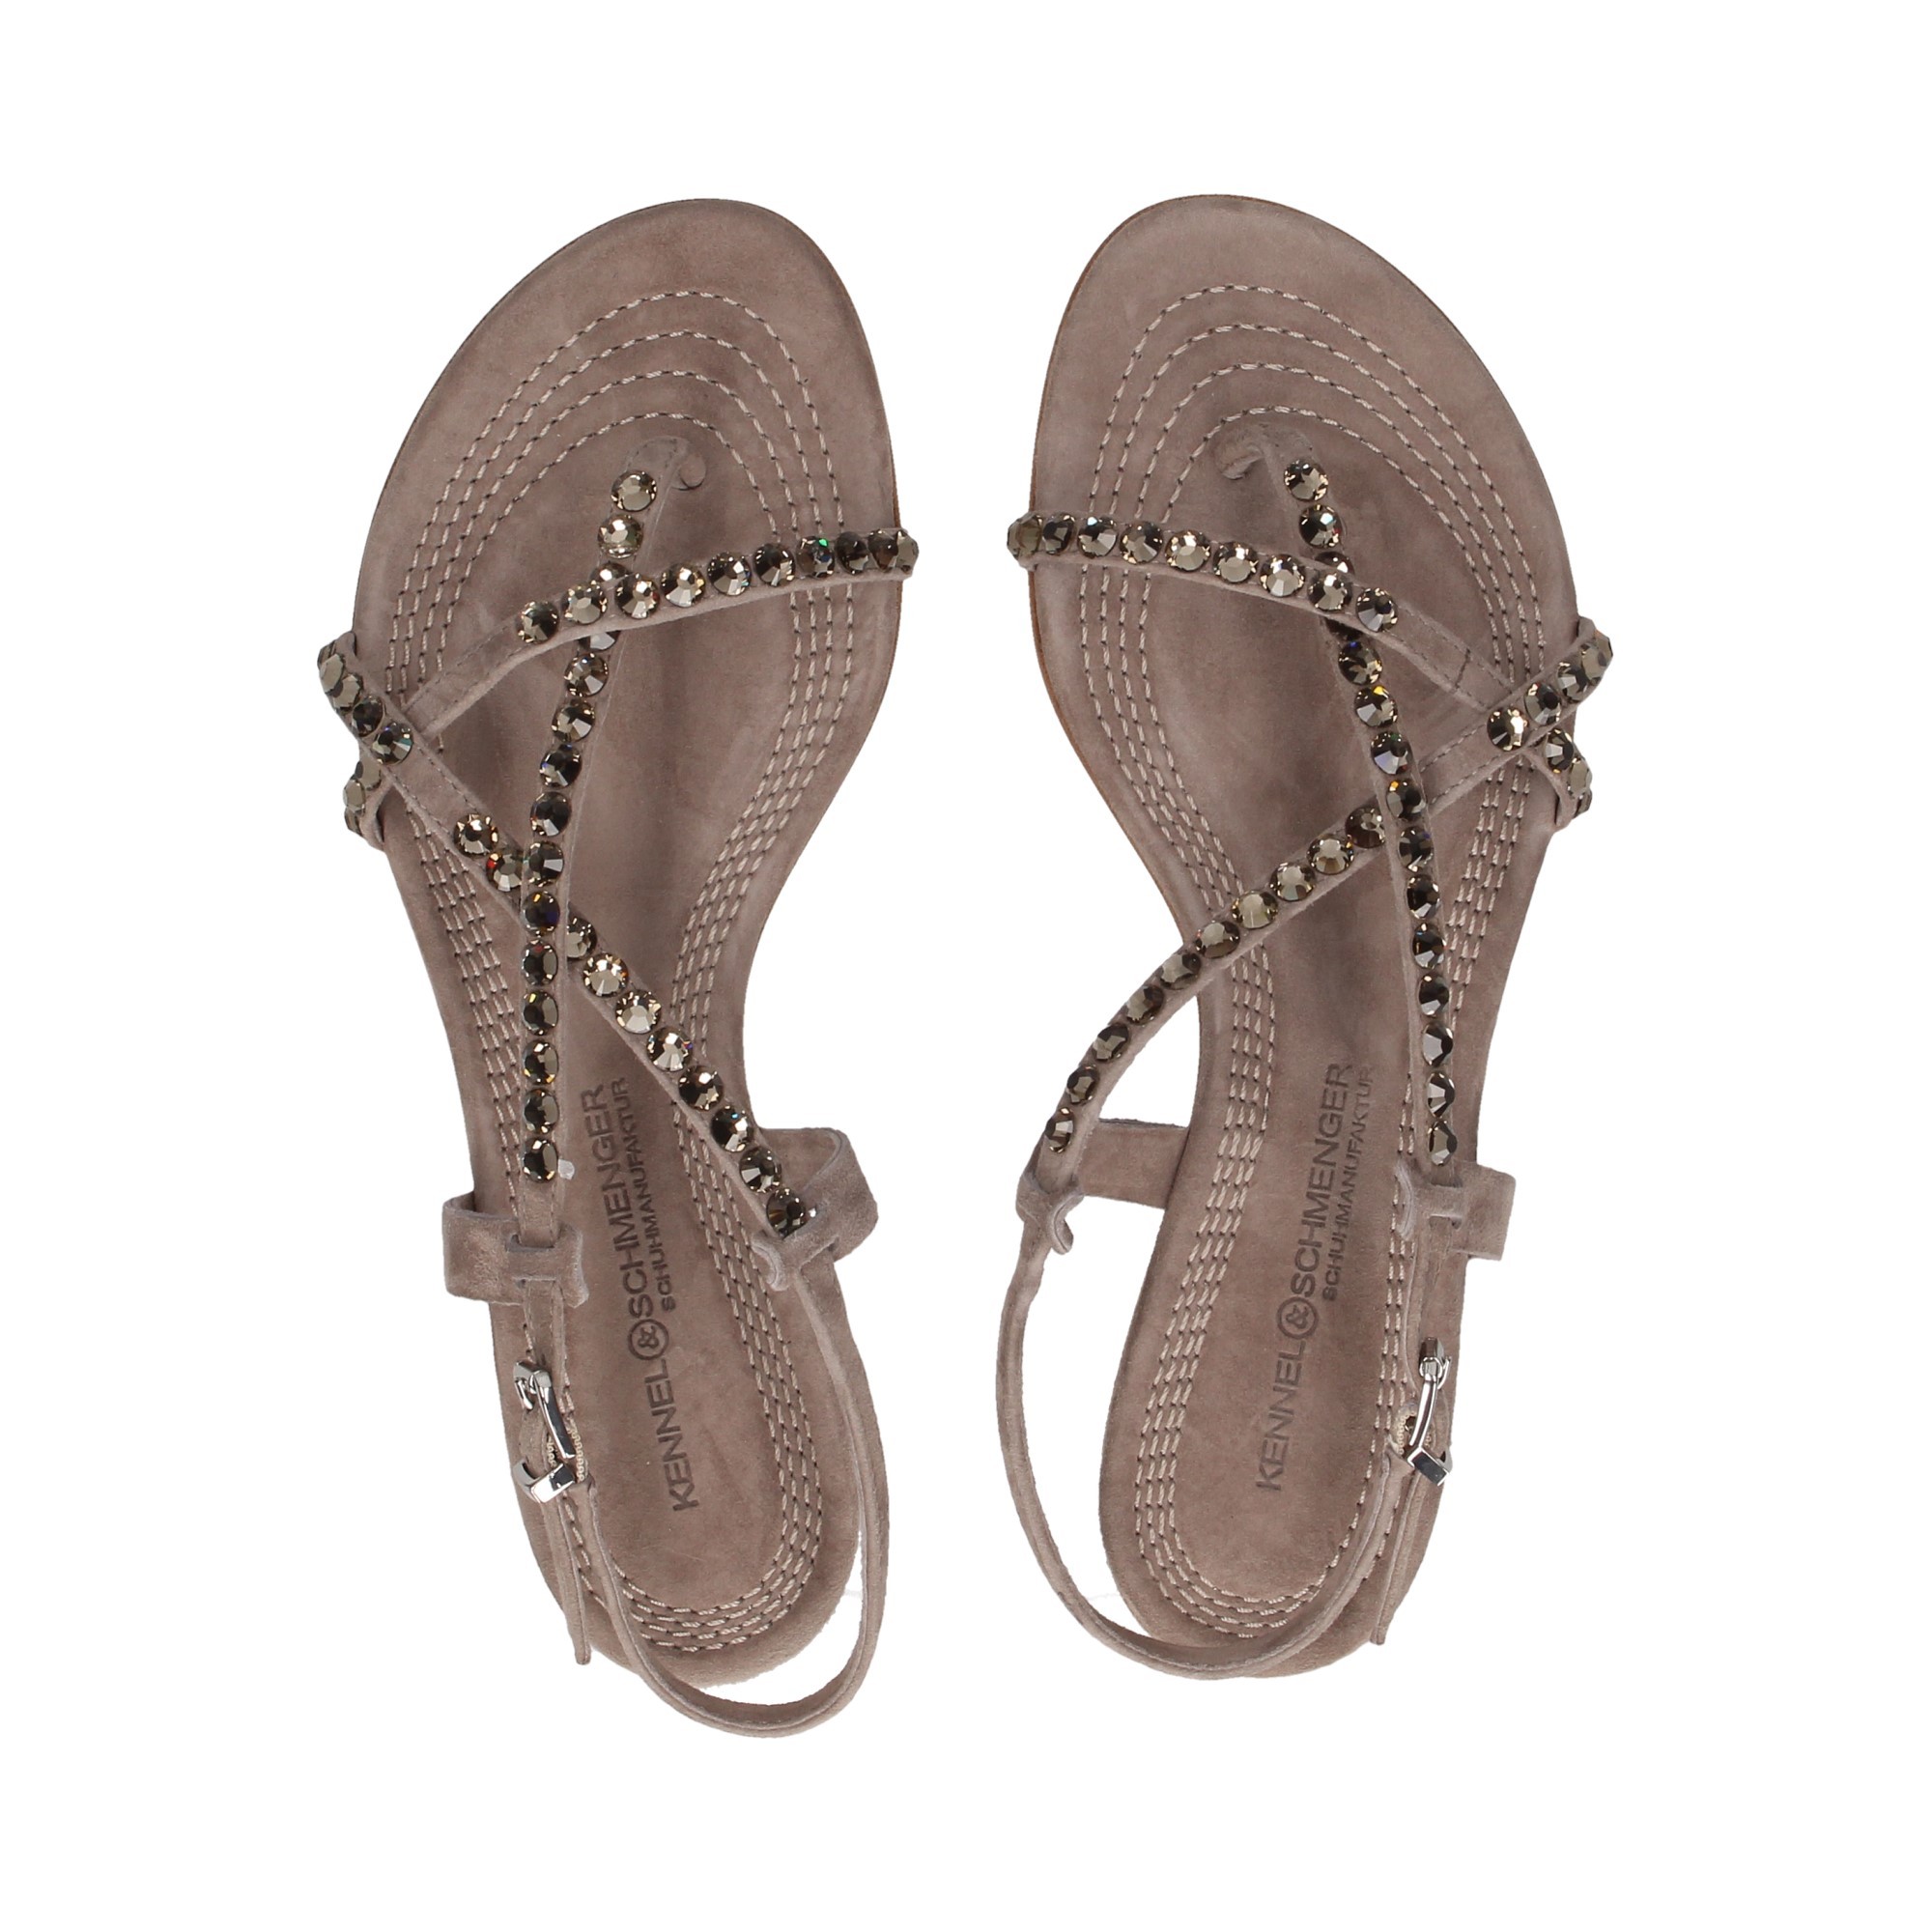 Moderator Gezondheid Definitief KENNEL & SCHMENGER Women's Flat sandals 95180 392 OMBRA TAUPE